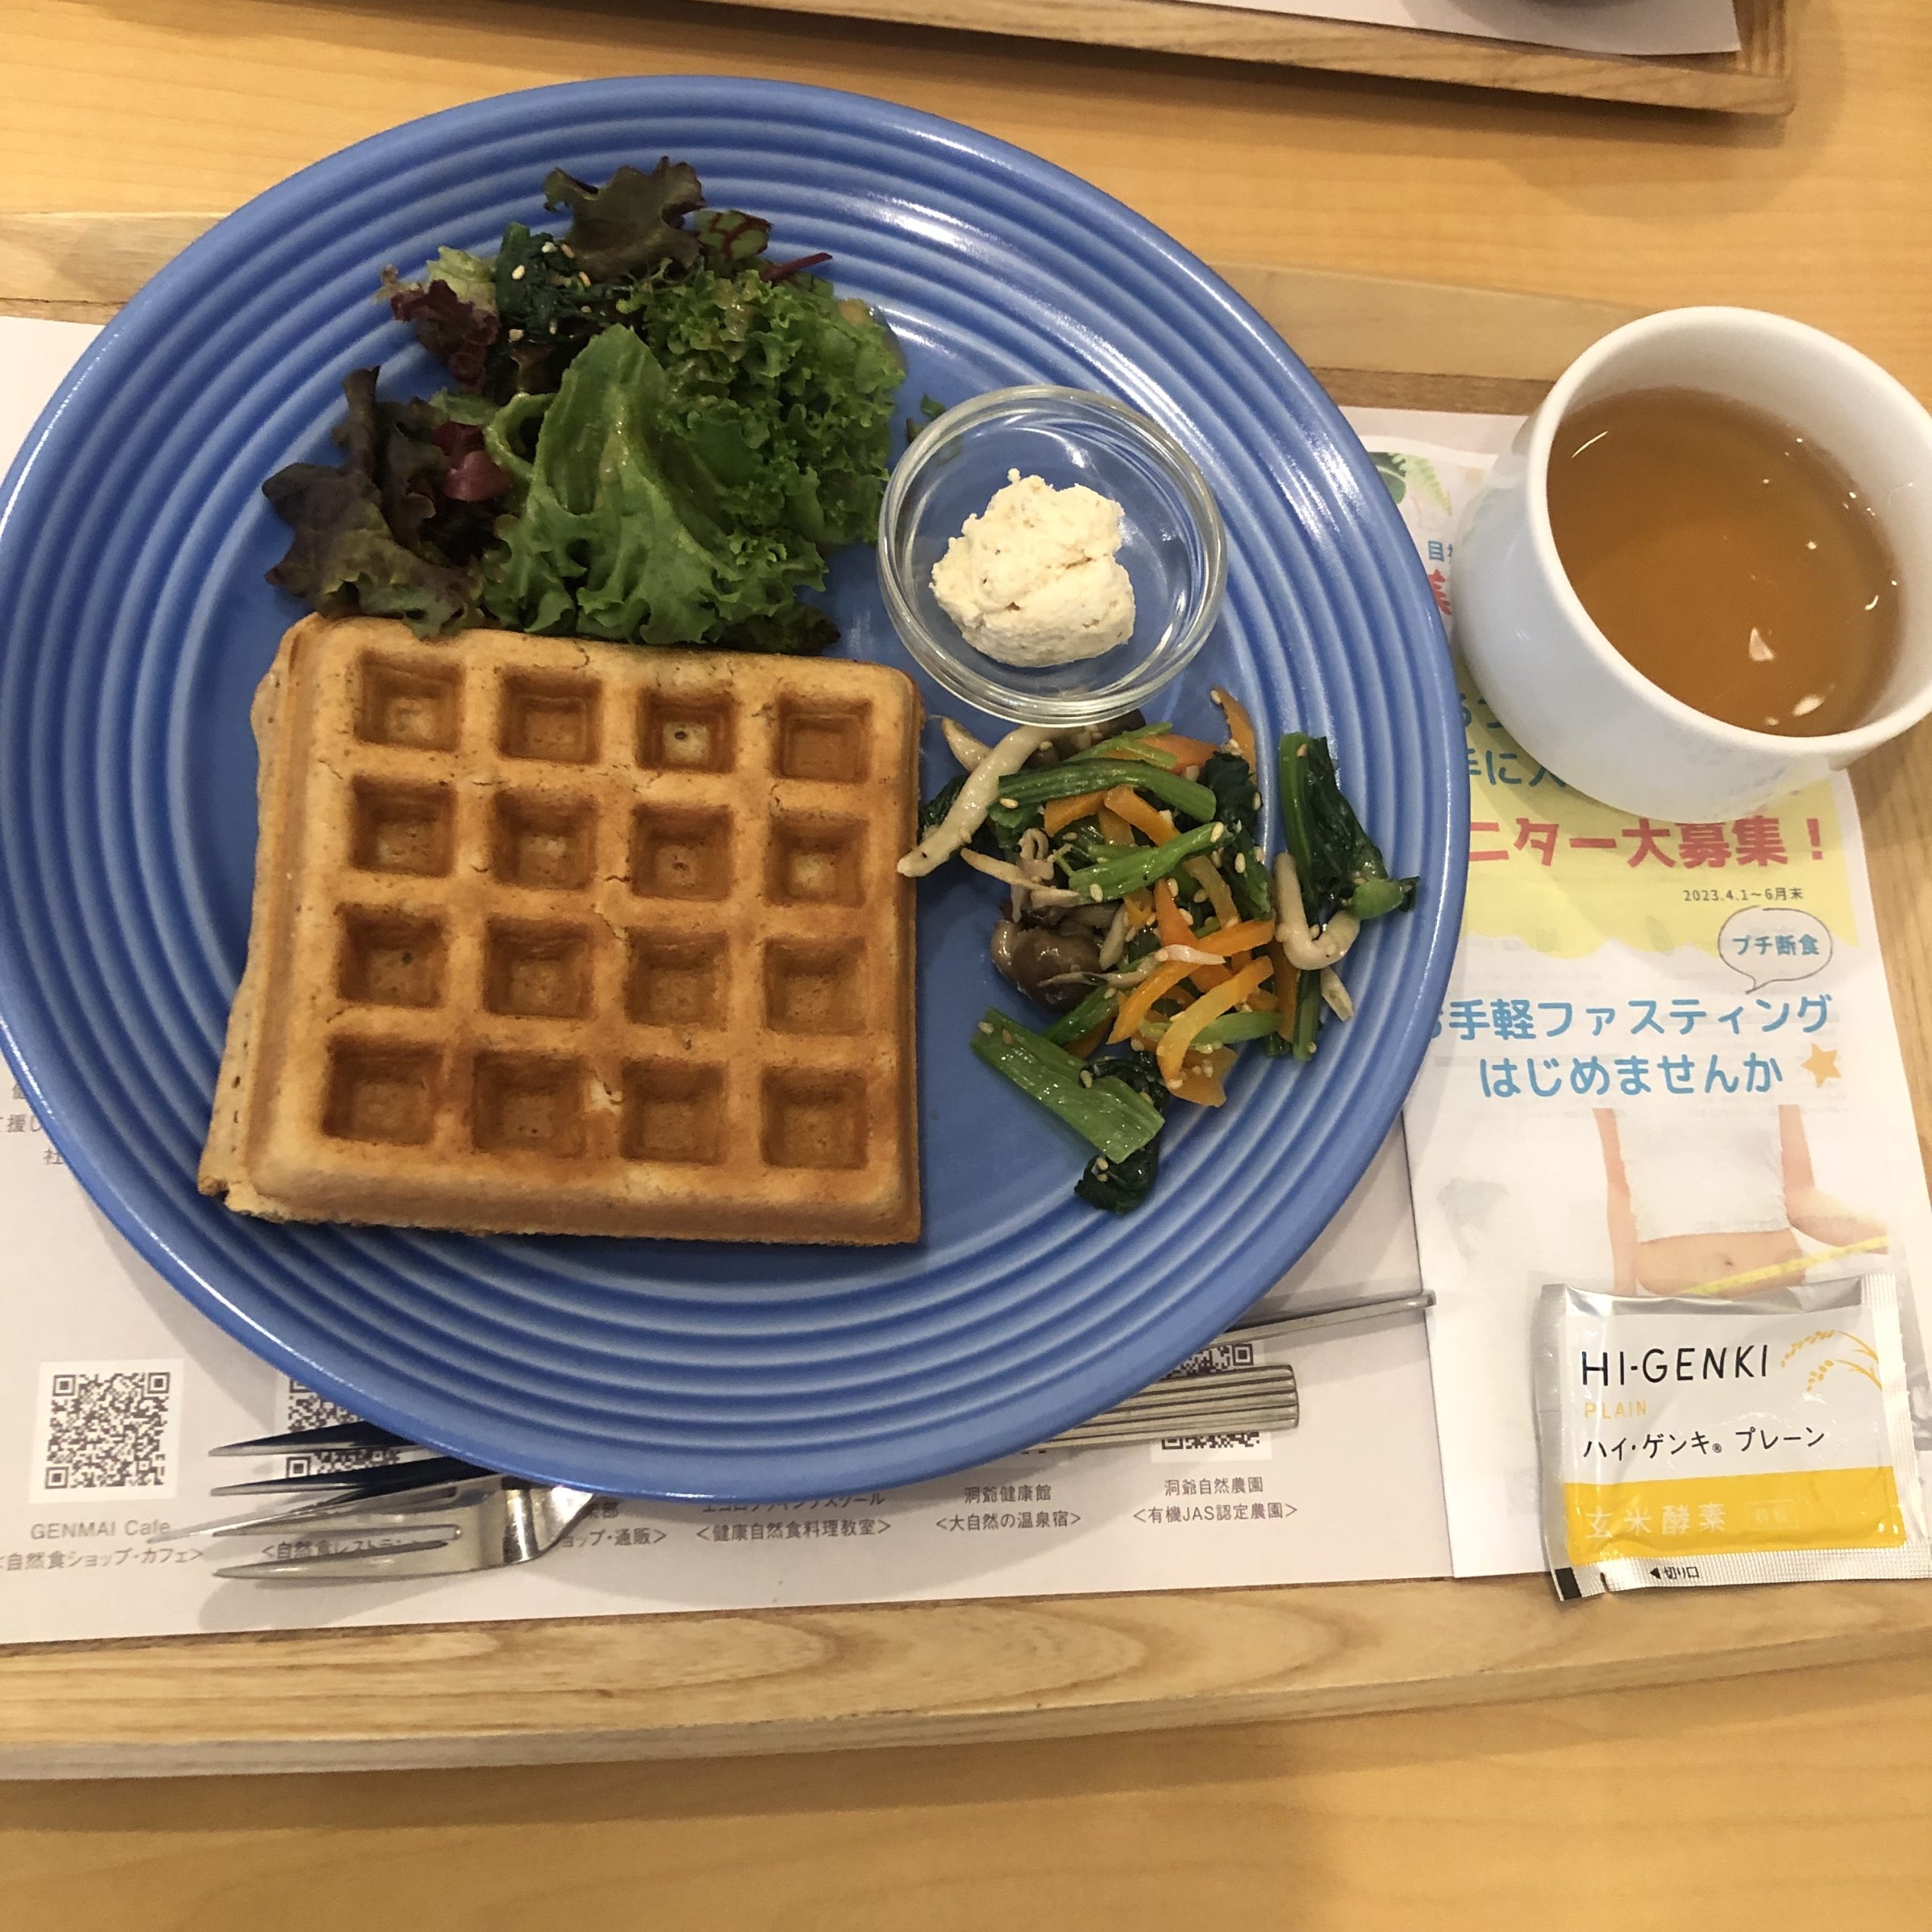 Vegan organic Japanese lunch at Genmai café: Osaka